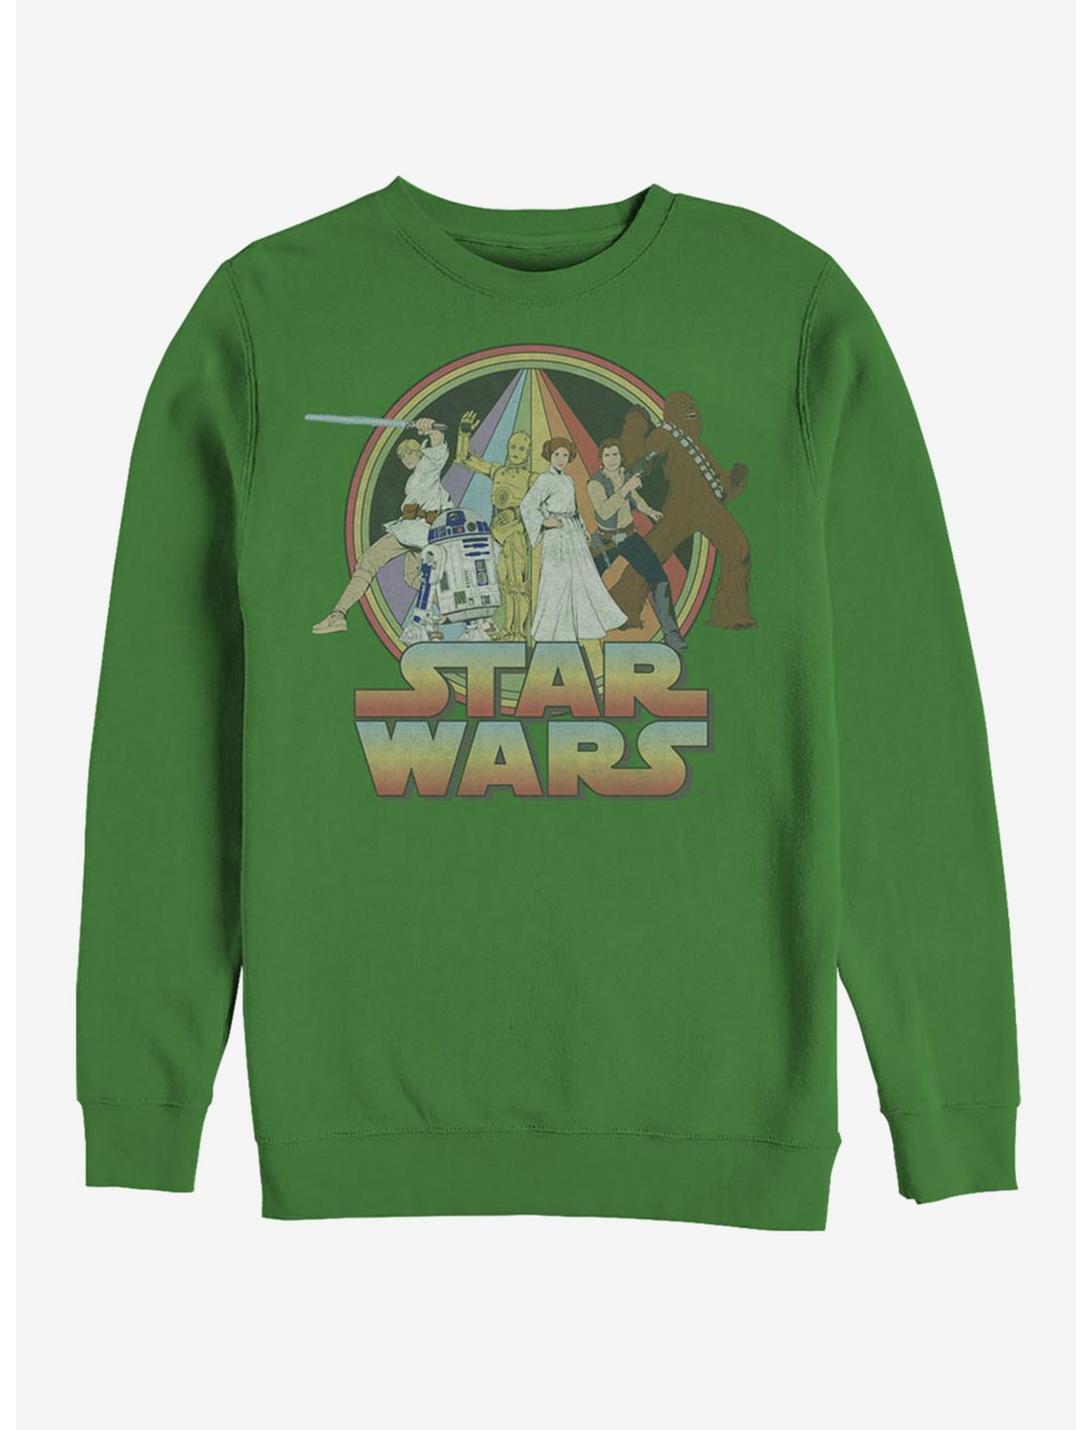 Star Wars Psychedelic Star Wars Sweatshirt, KELLY, hi-res